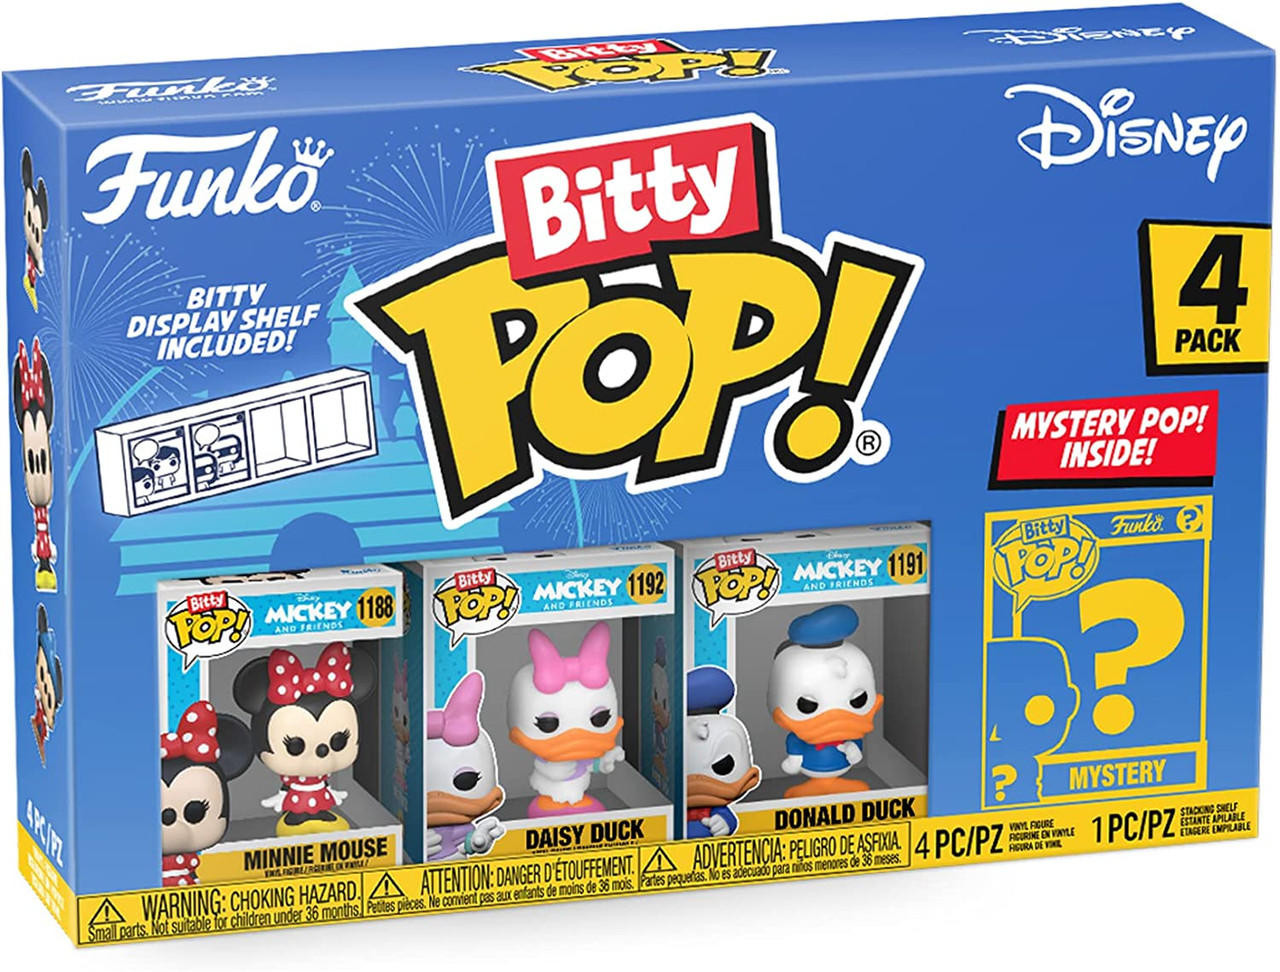  Funko Bitty Pop! Star Wars Mini Collectible Toys 4